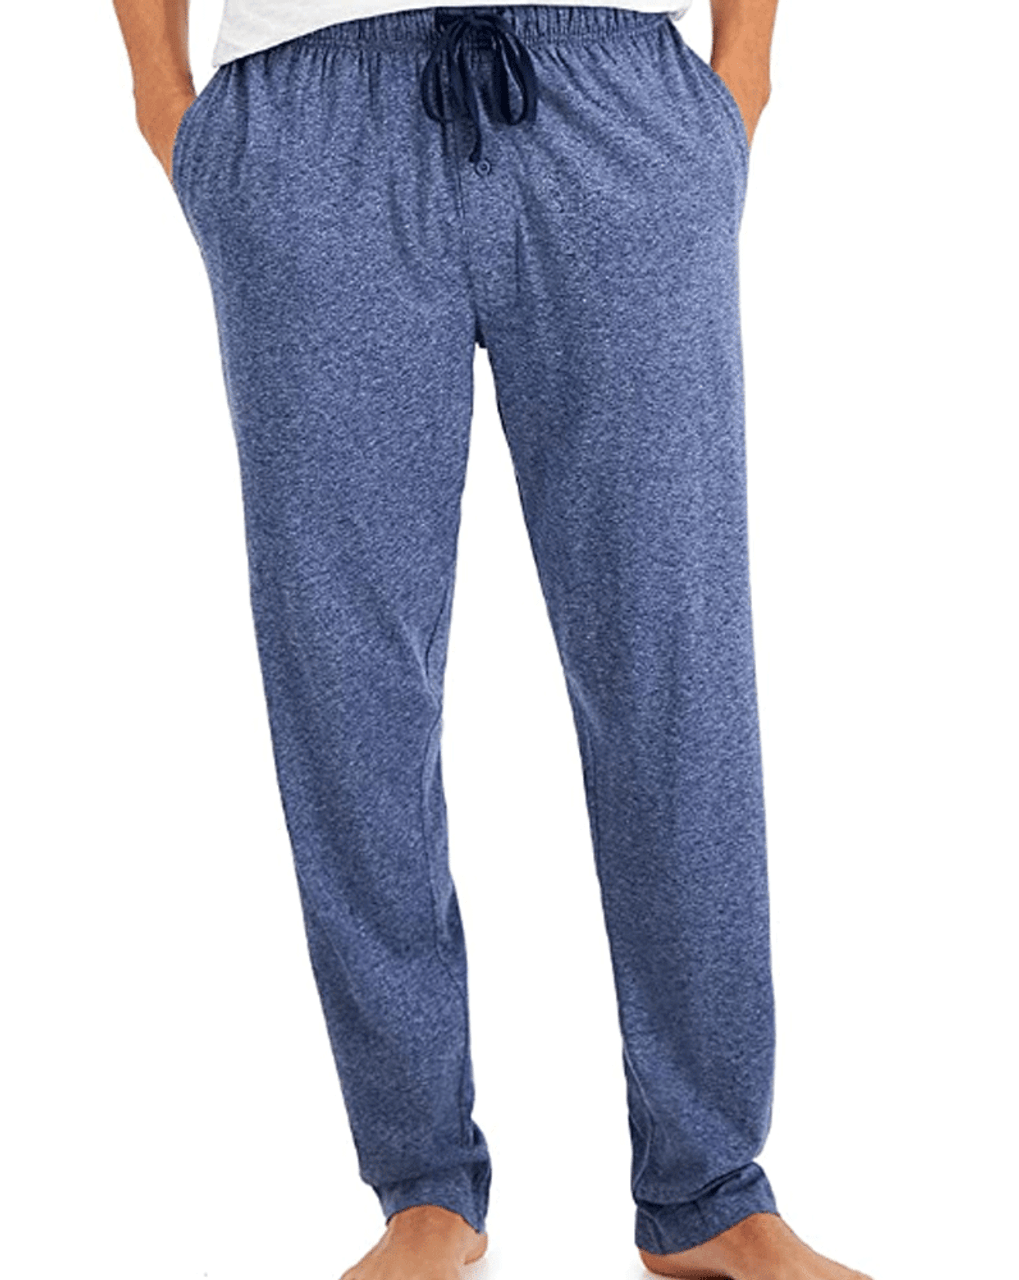 Hanes X-Temp Jersey Knit Lounge Pants, 6 Colors, 4X, 5X, 6X, 7X